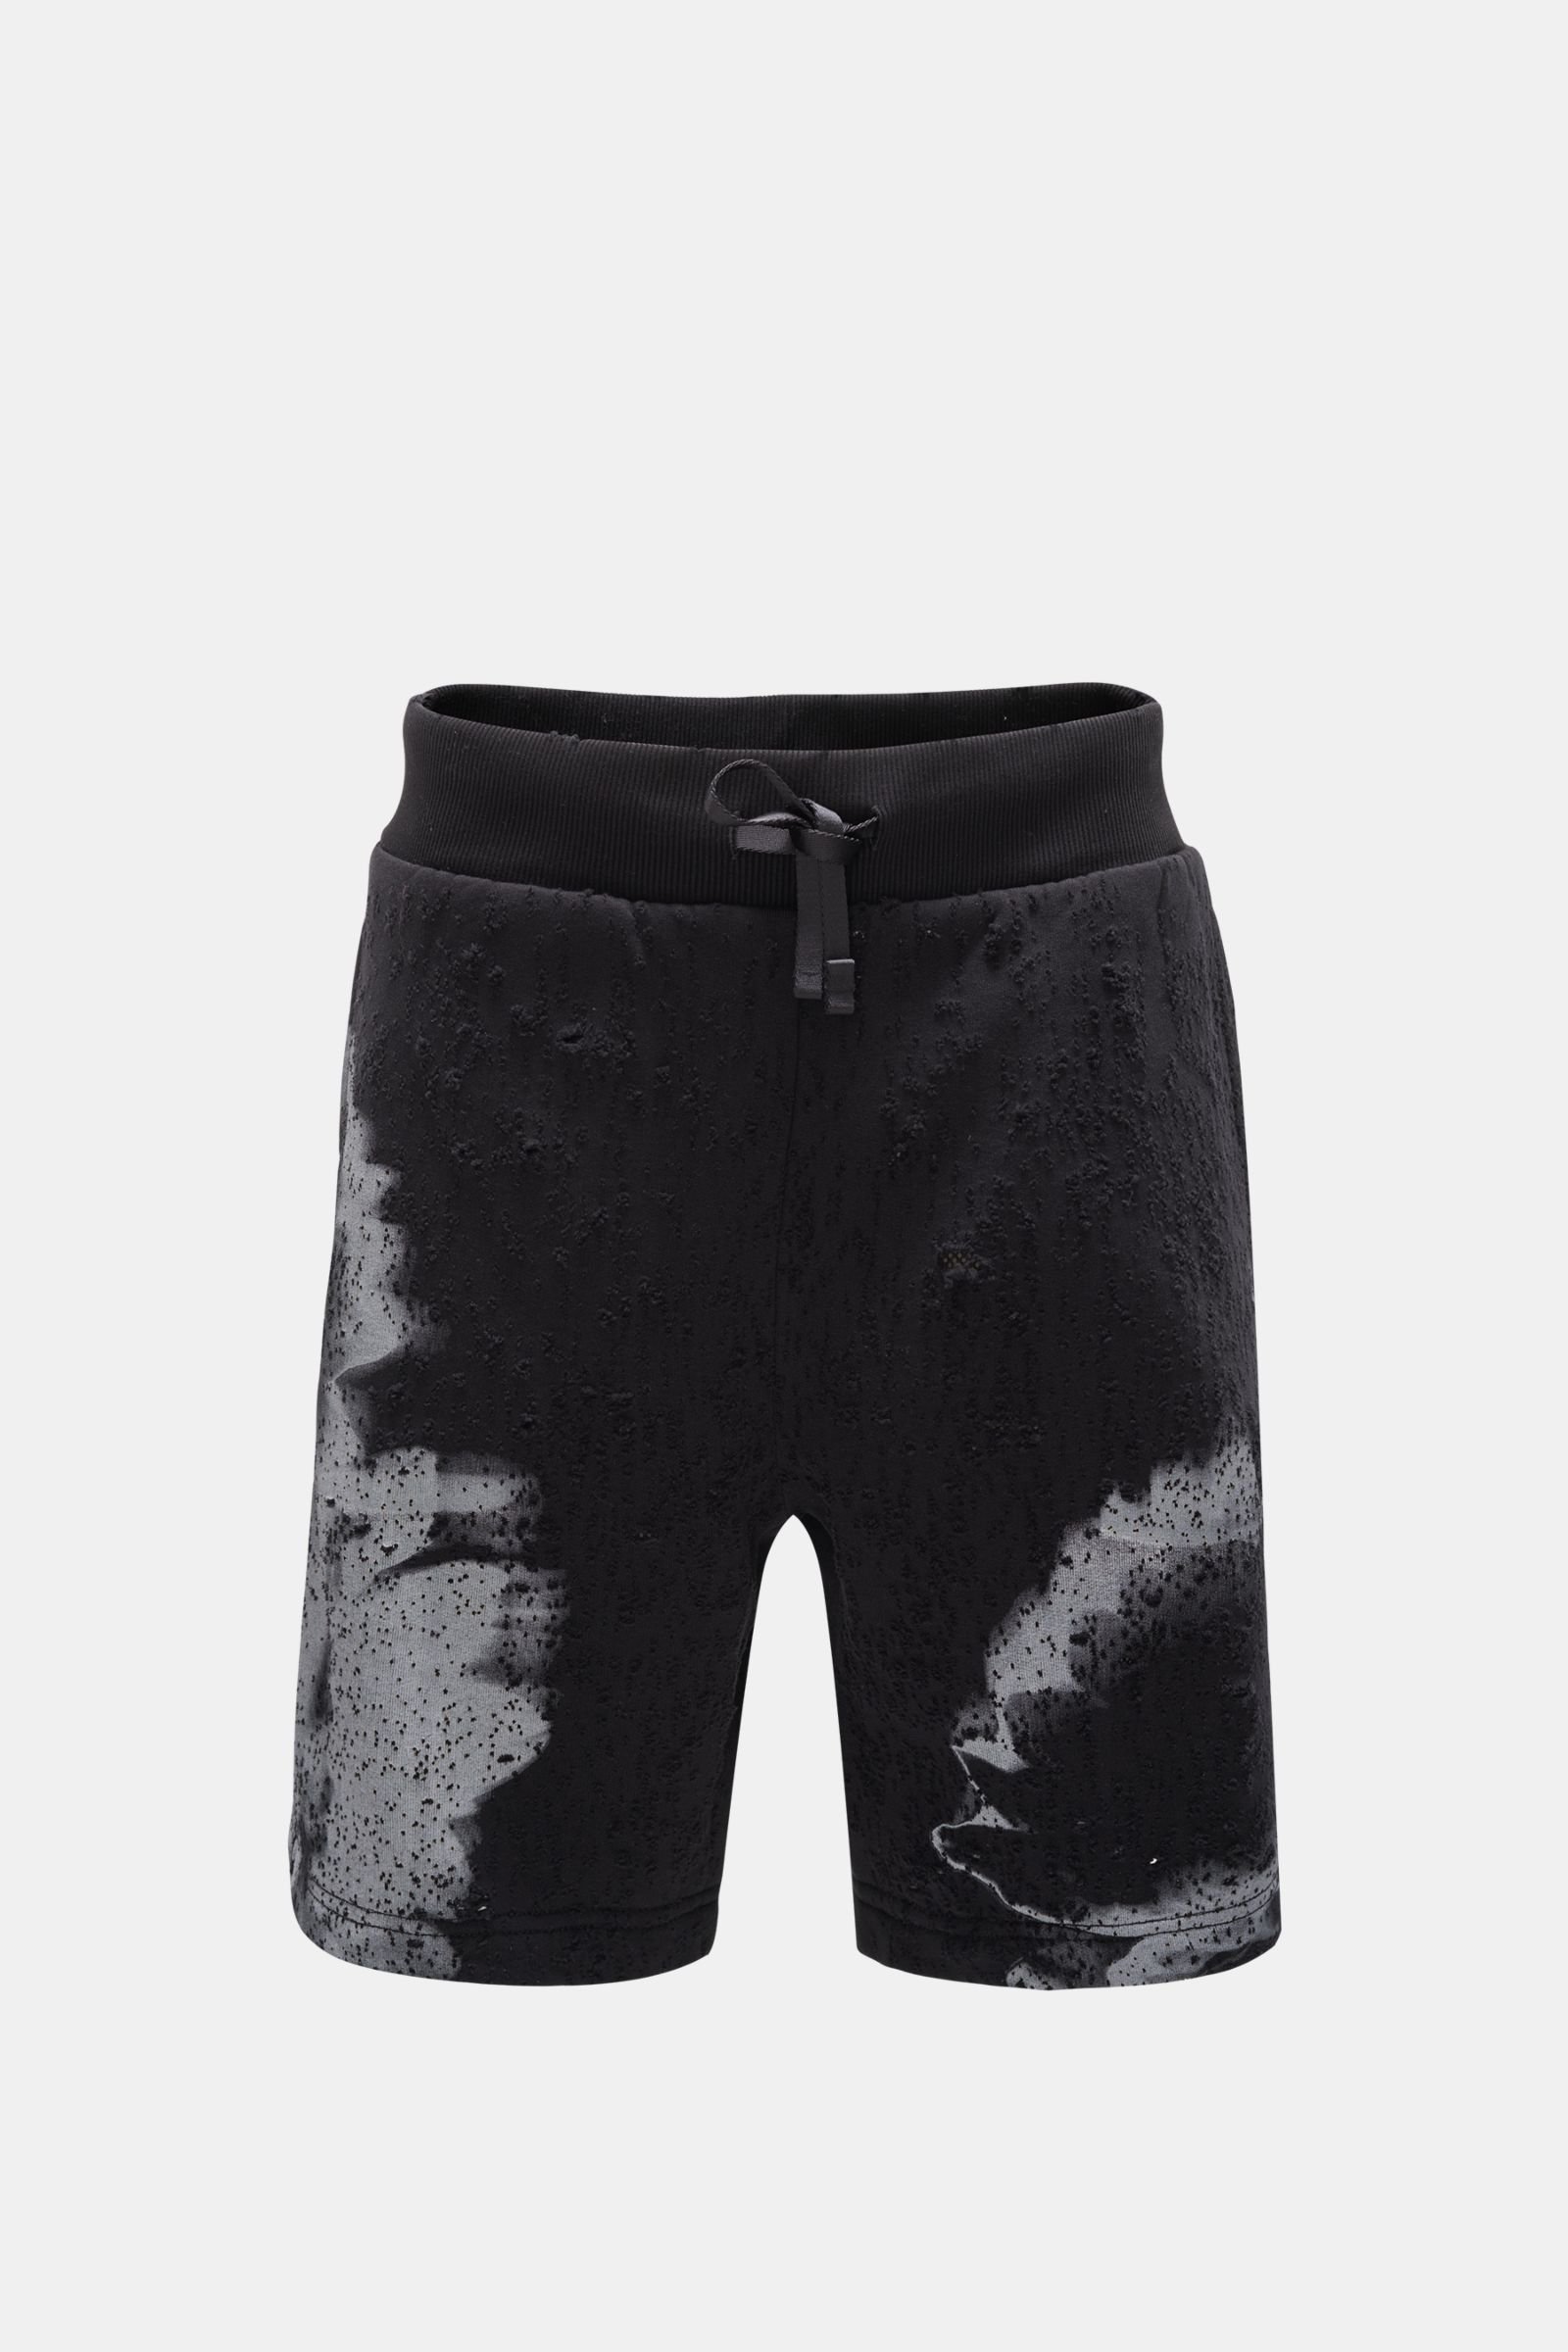 Sweat shorts black/white